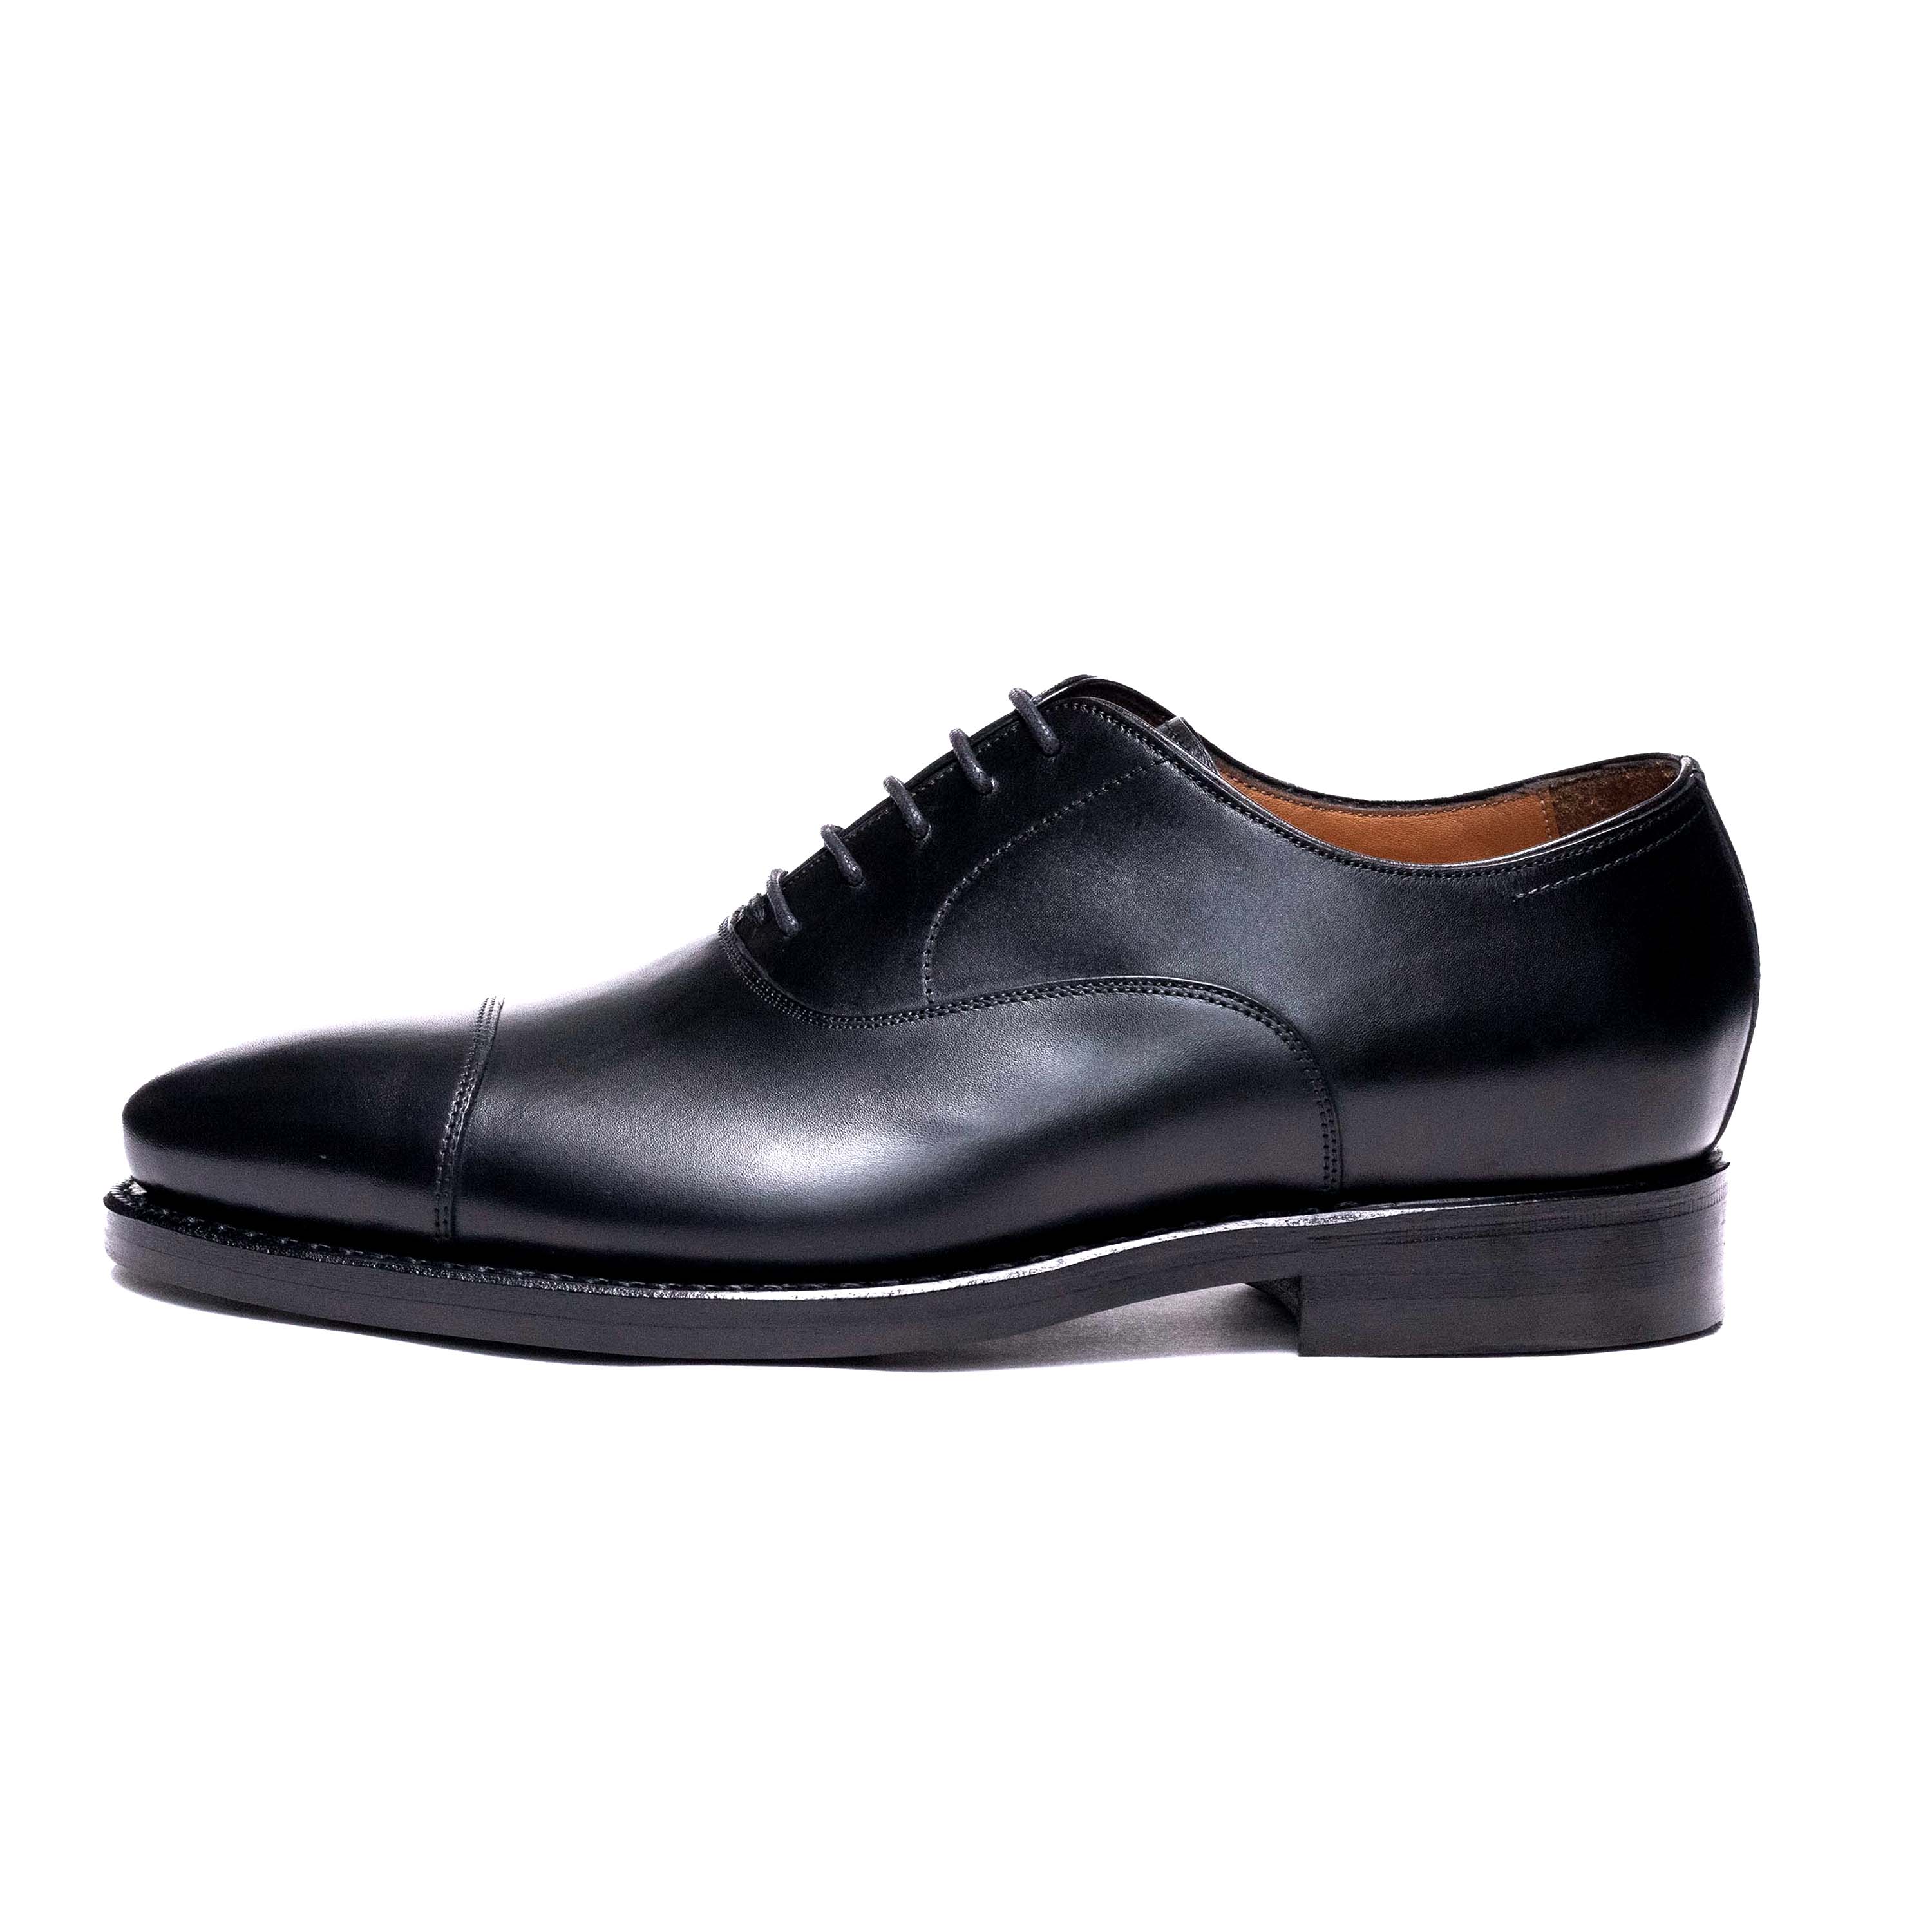 Men's Oxford Cap Toe (Dainite Sole) / Black Calf 98321